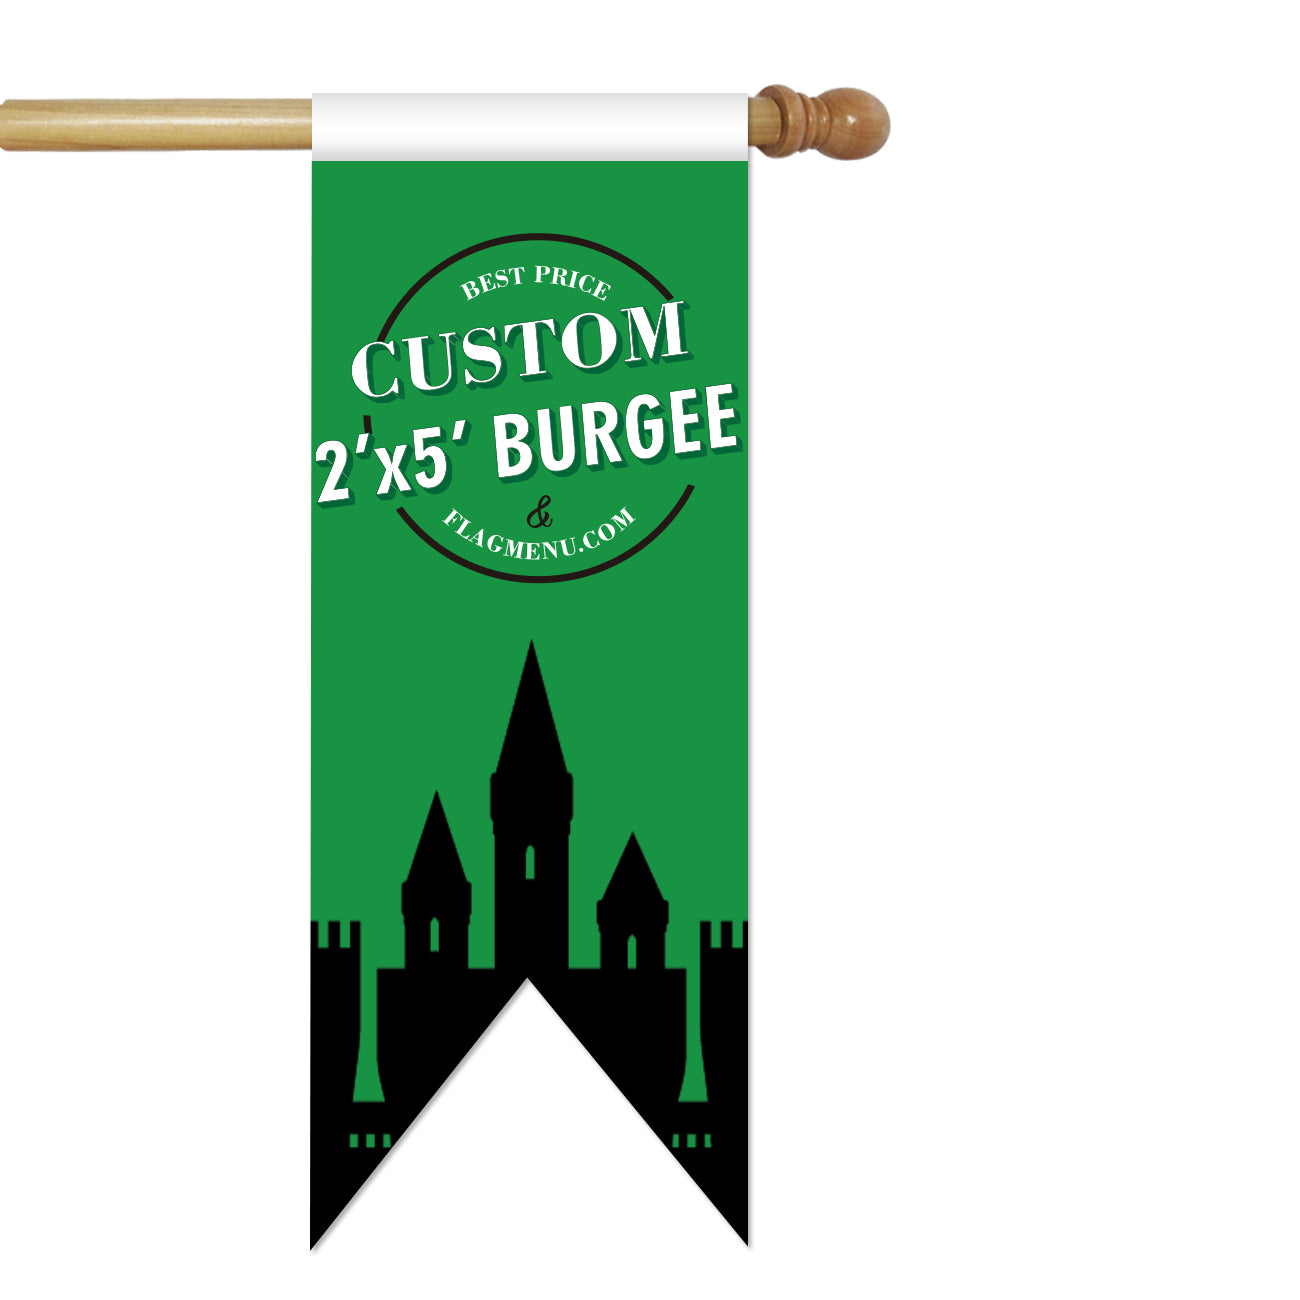 2'x5' Custom Hanging Burgee With Sleeve-Flag Menu